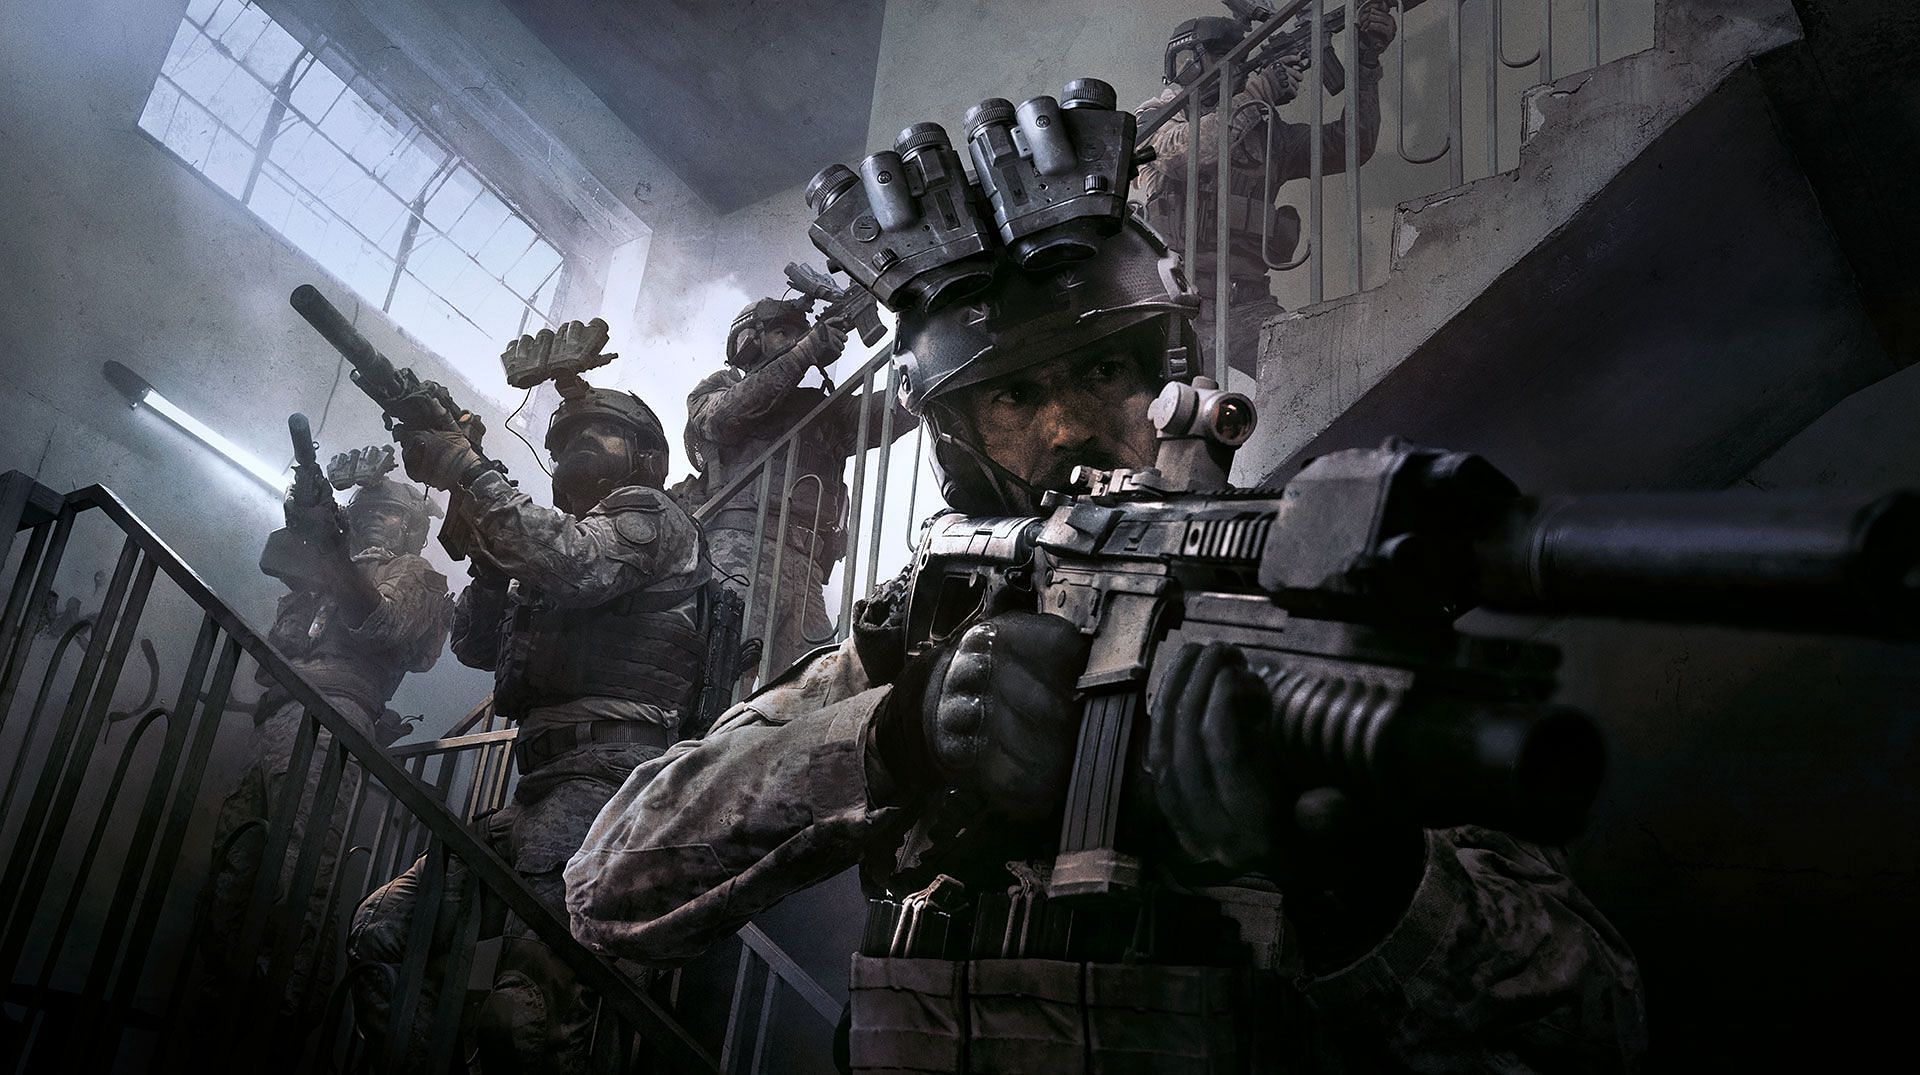 Image via Call of Duty: Modern Warfare